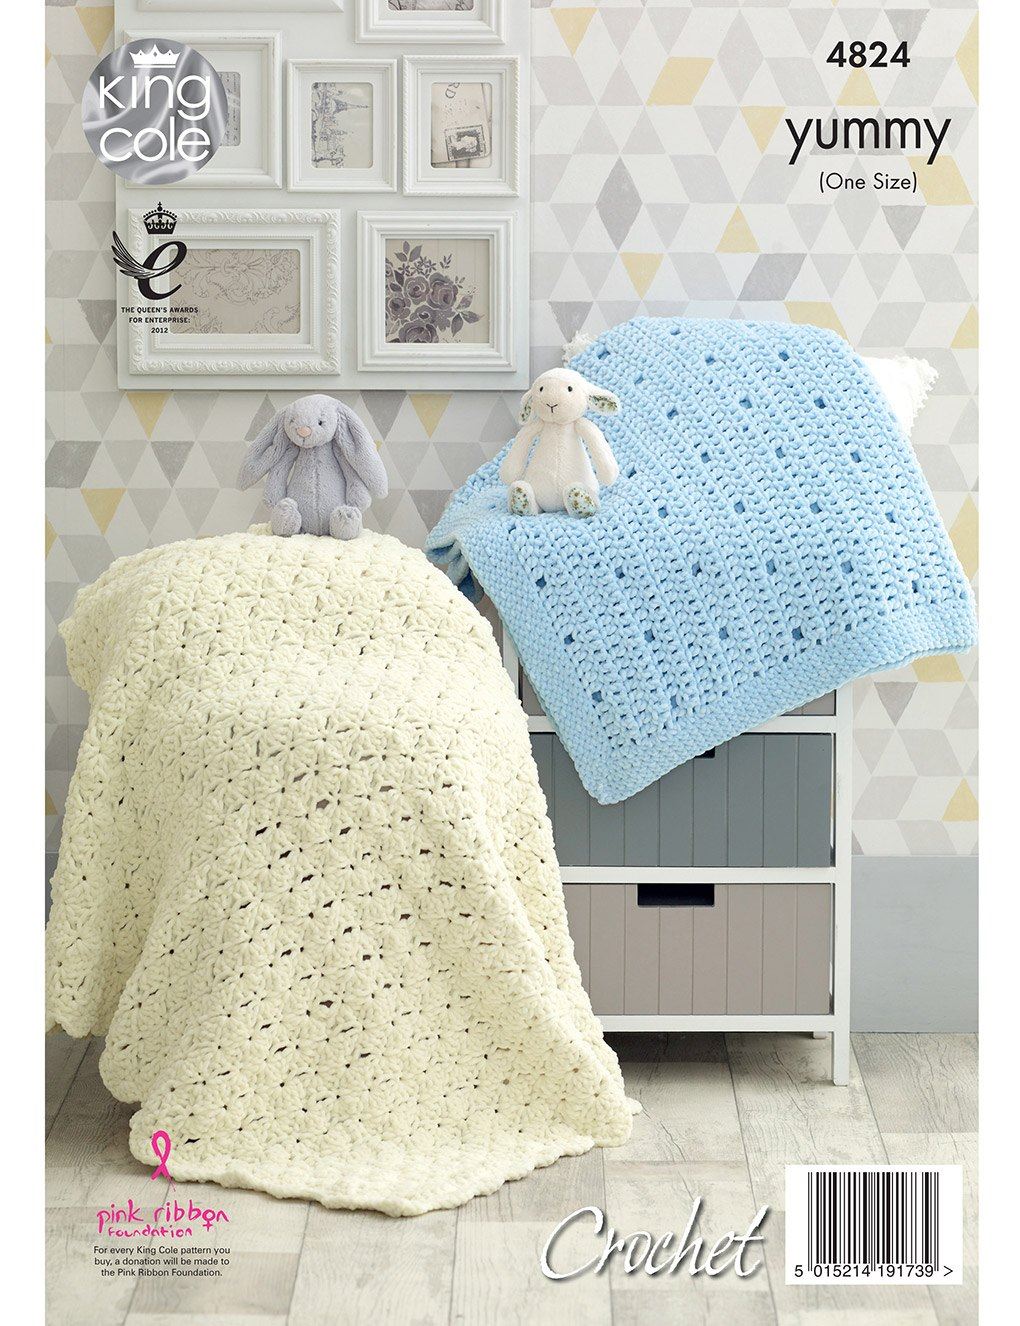 King Cole Yummy knitting pattern (4824) crochet blankets